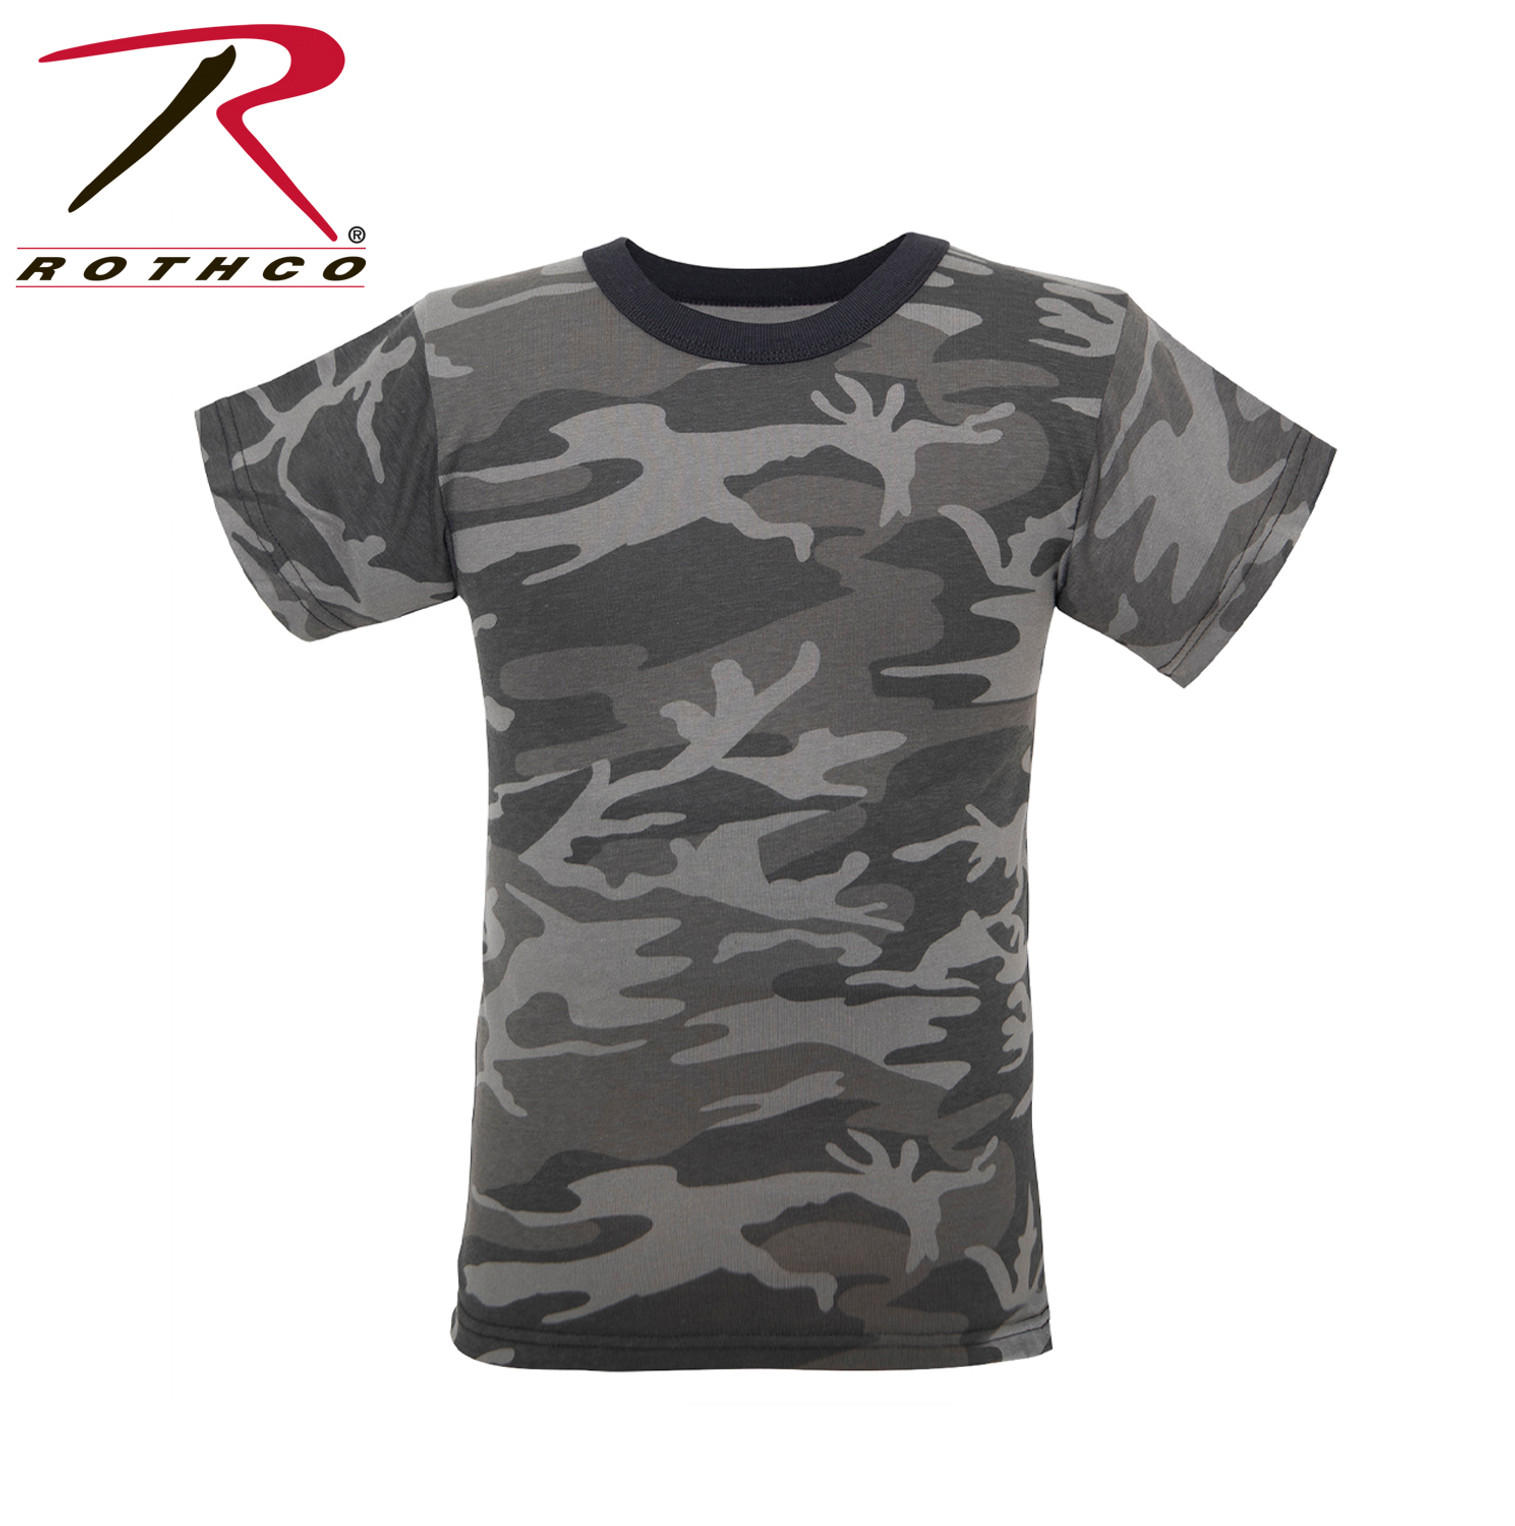 Rothco Kids Camo T-Shirt - Black Camo